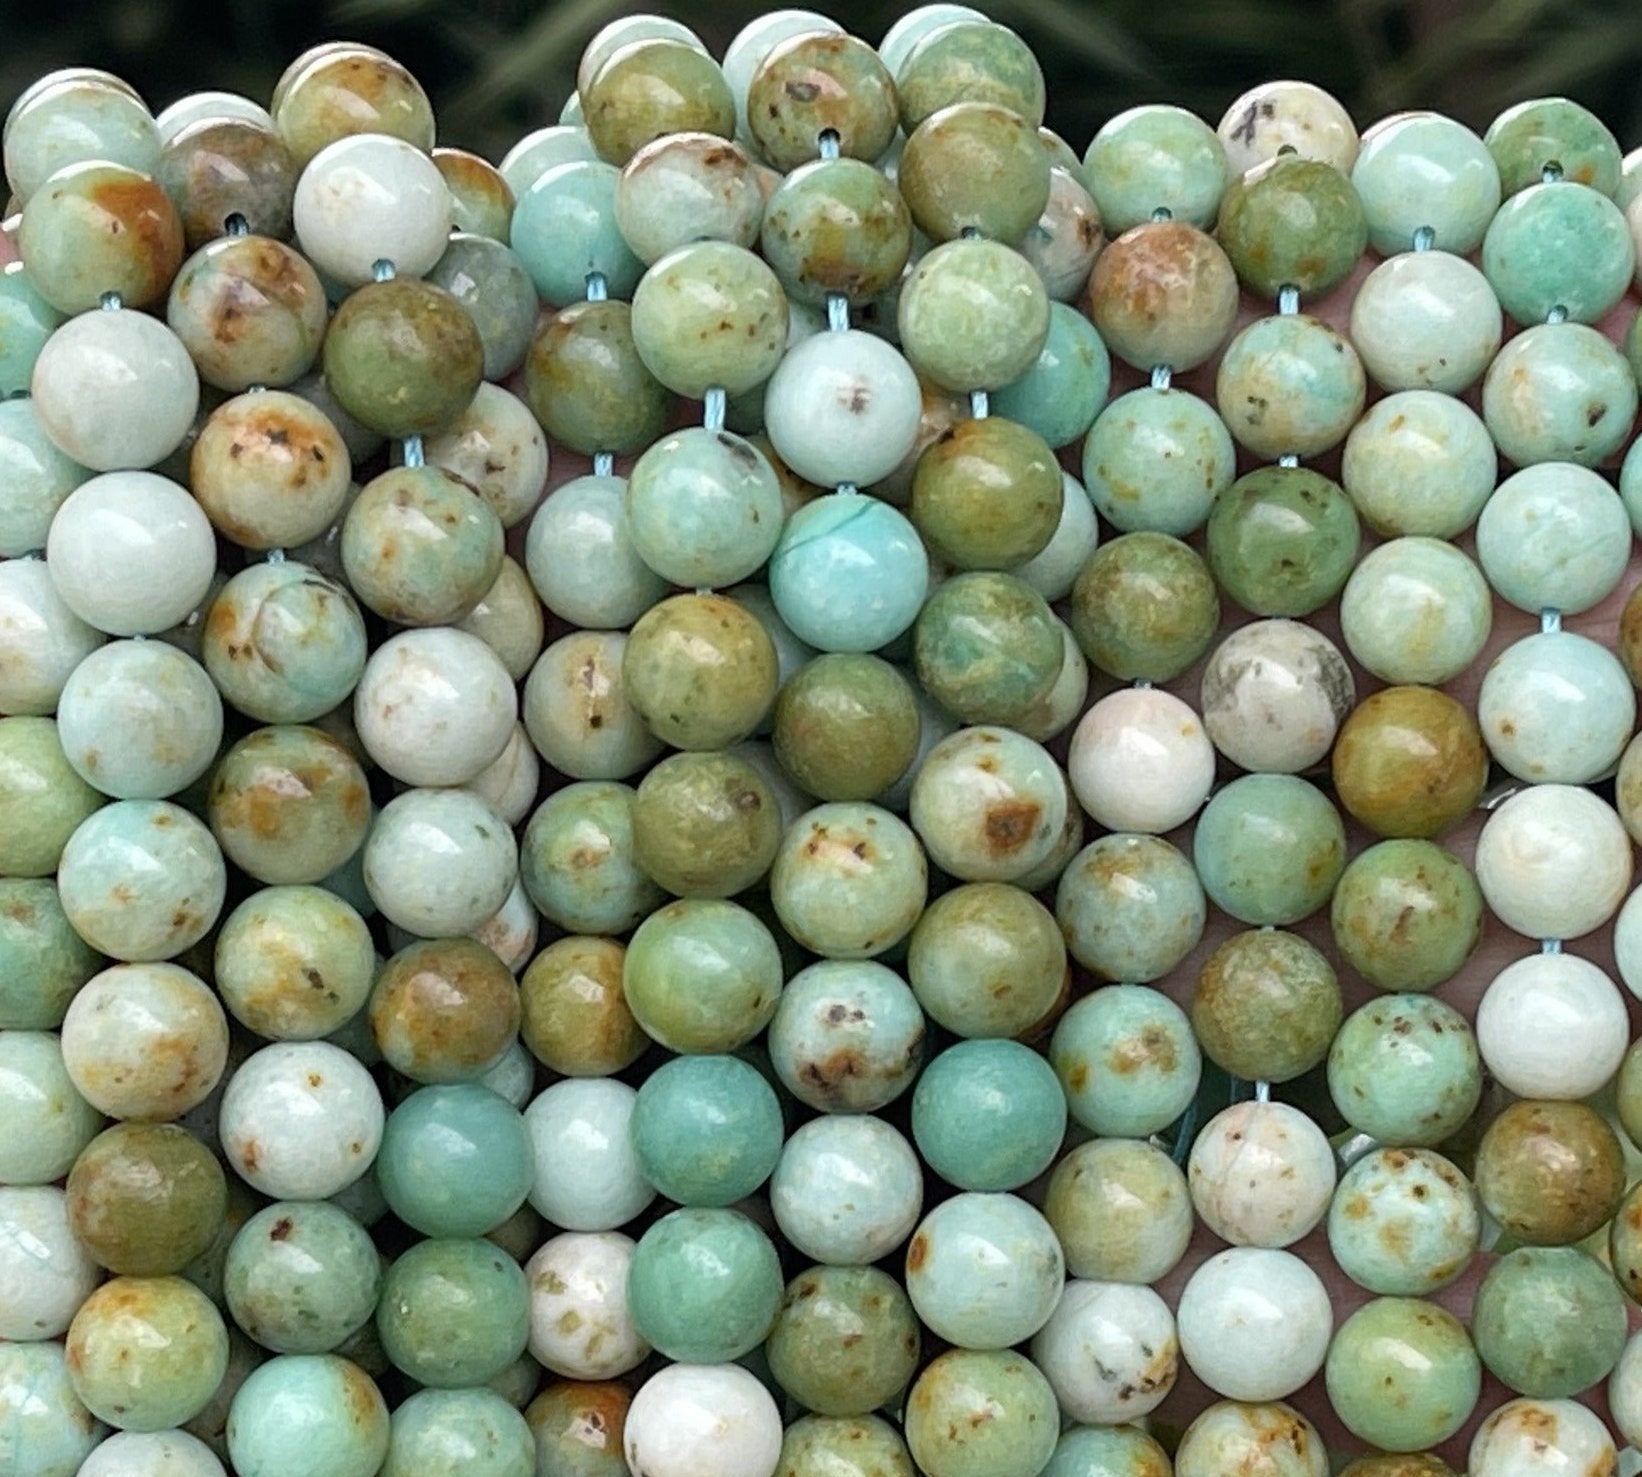 Green Mongolian Turquoise 10mm round natural gemstone beads 15.5" strand